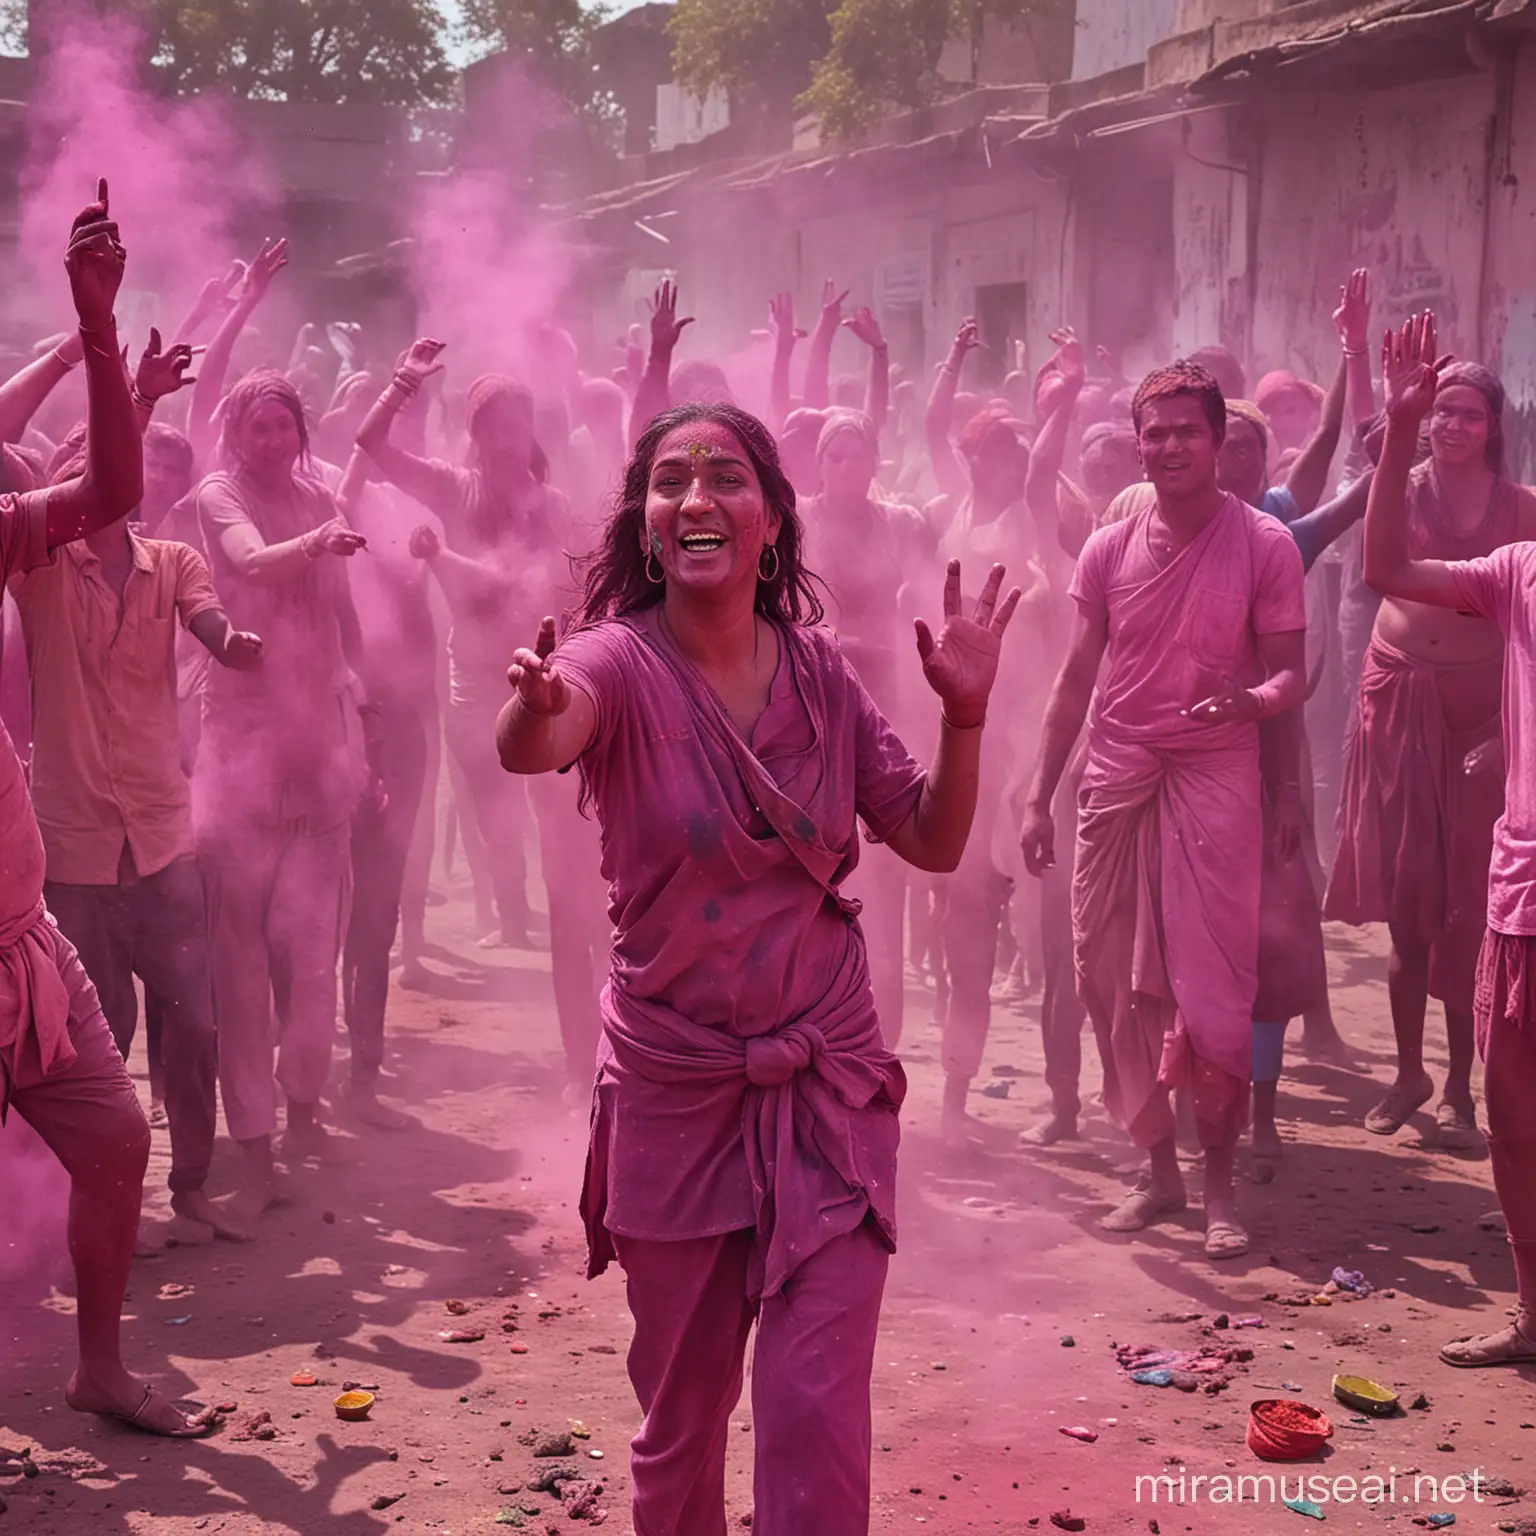 Vibrant Holi Festival Celebration with Colorful Powders and Joyful Smiles